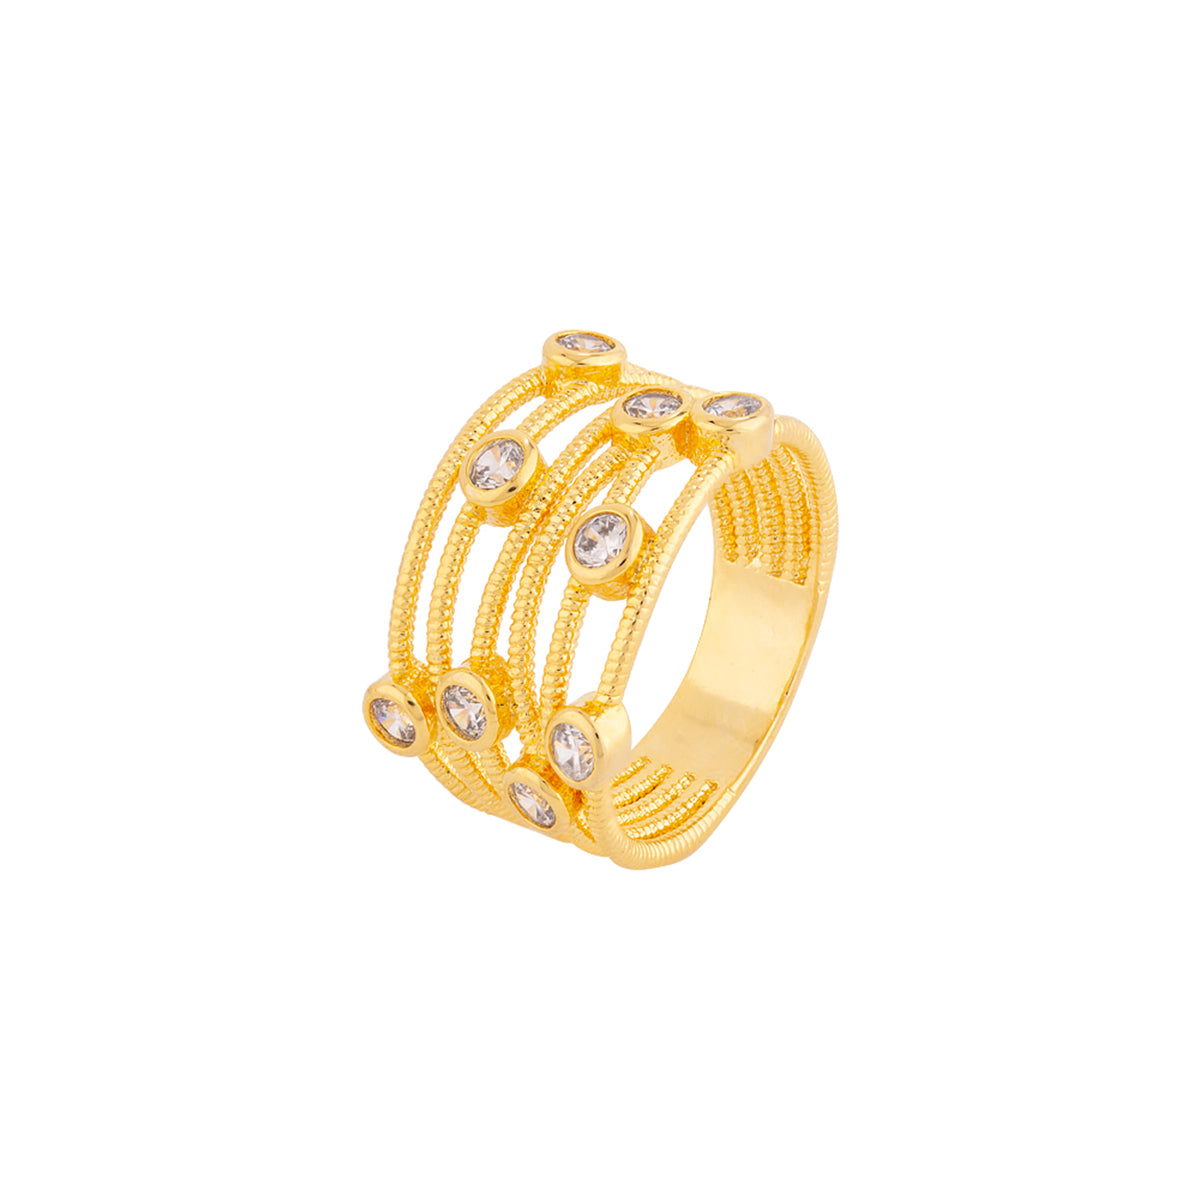 Cutwork Design Layered Style Ring